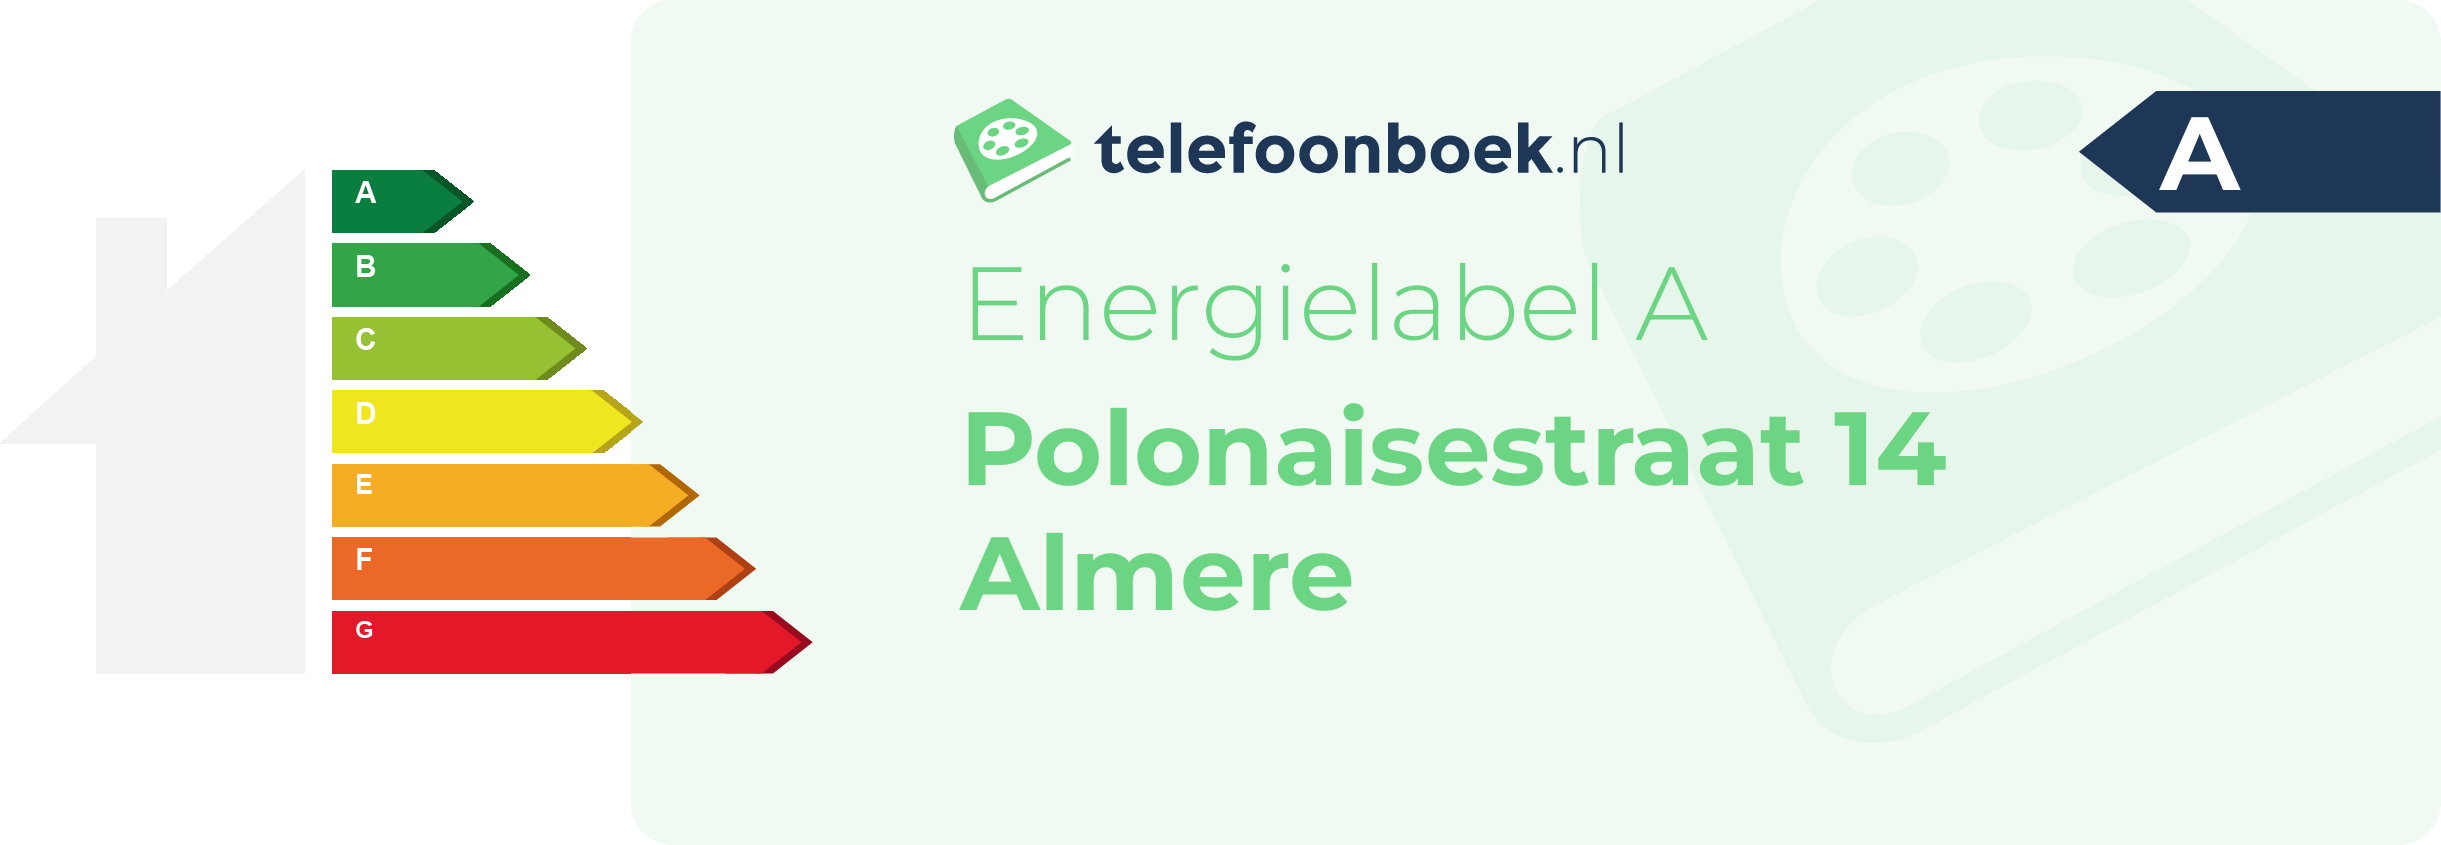 Energielabel Polonaisestraat 14 Almere